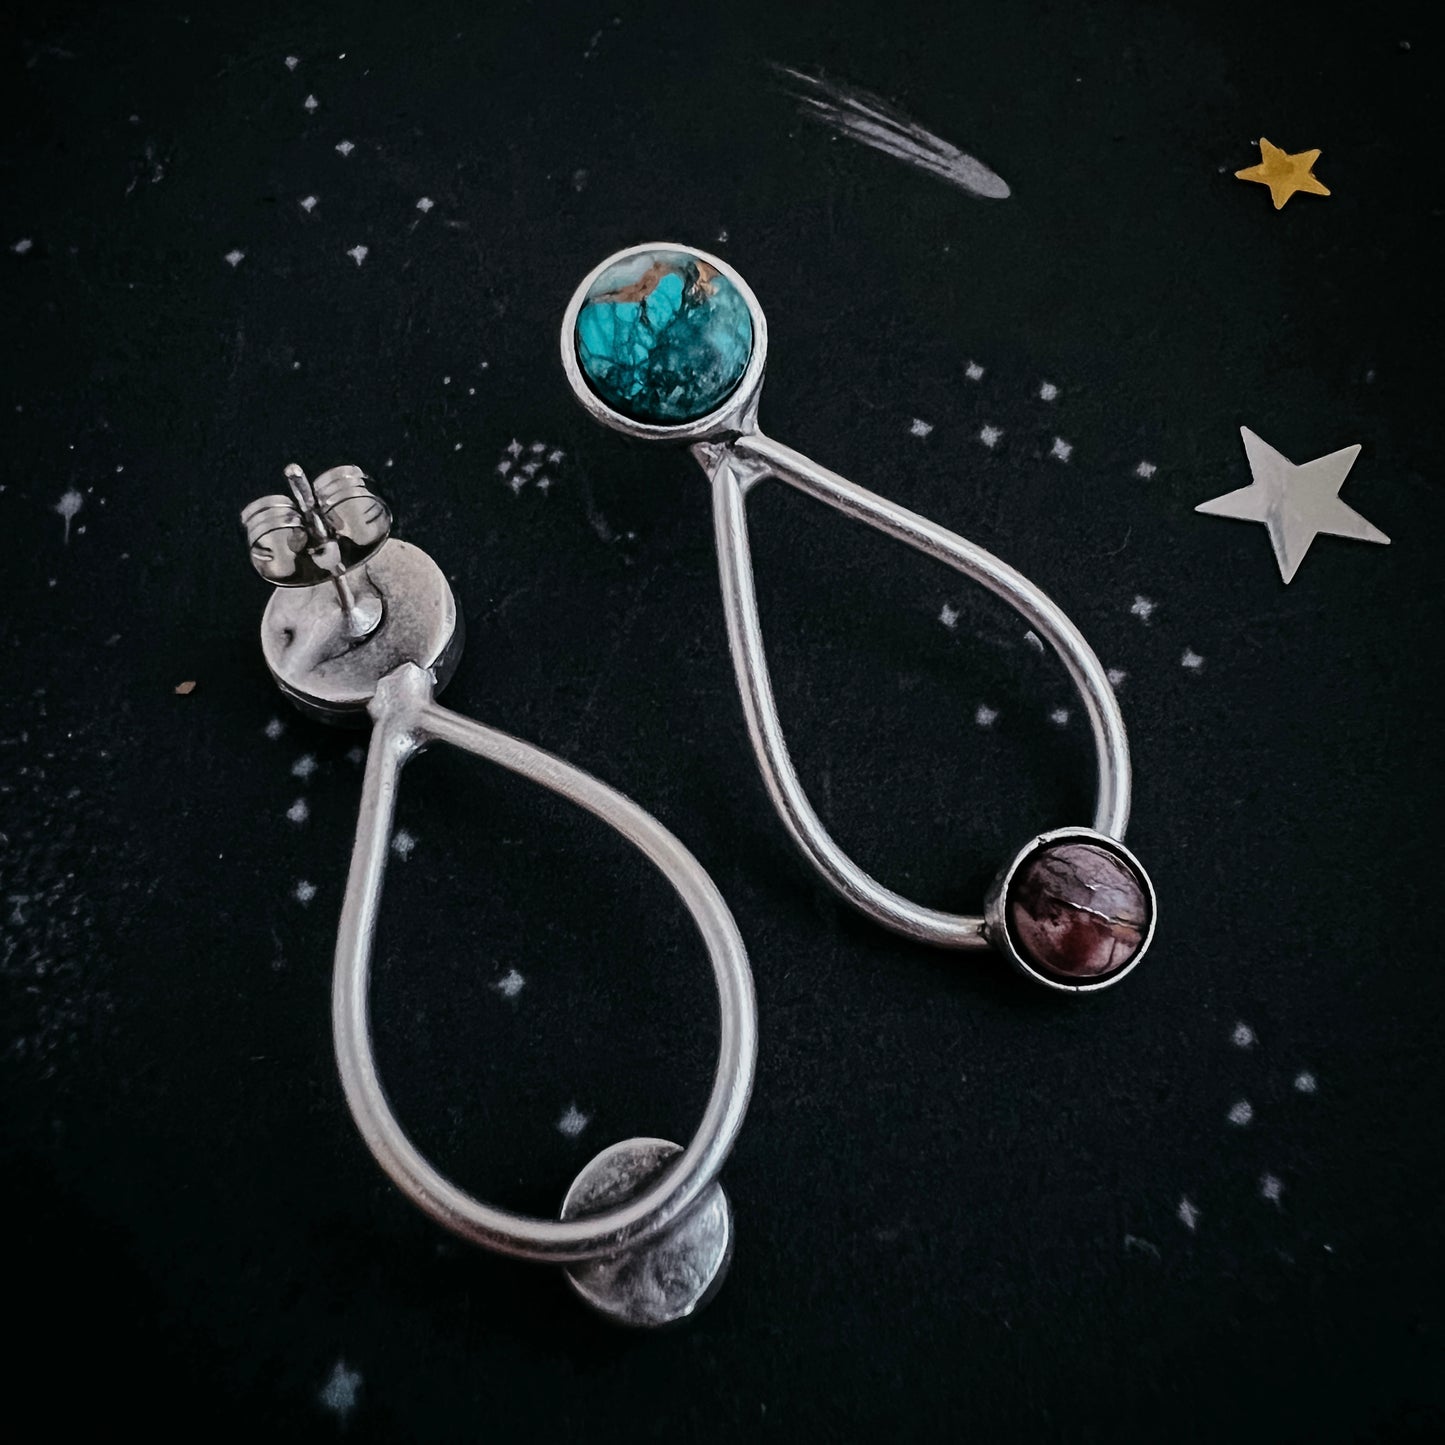 Journey to Mars Stud Earrings - Copper Chrysocolla Earth and Red Jasper Moon Earrings Yugen Handmade   